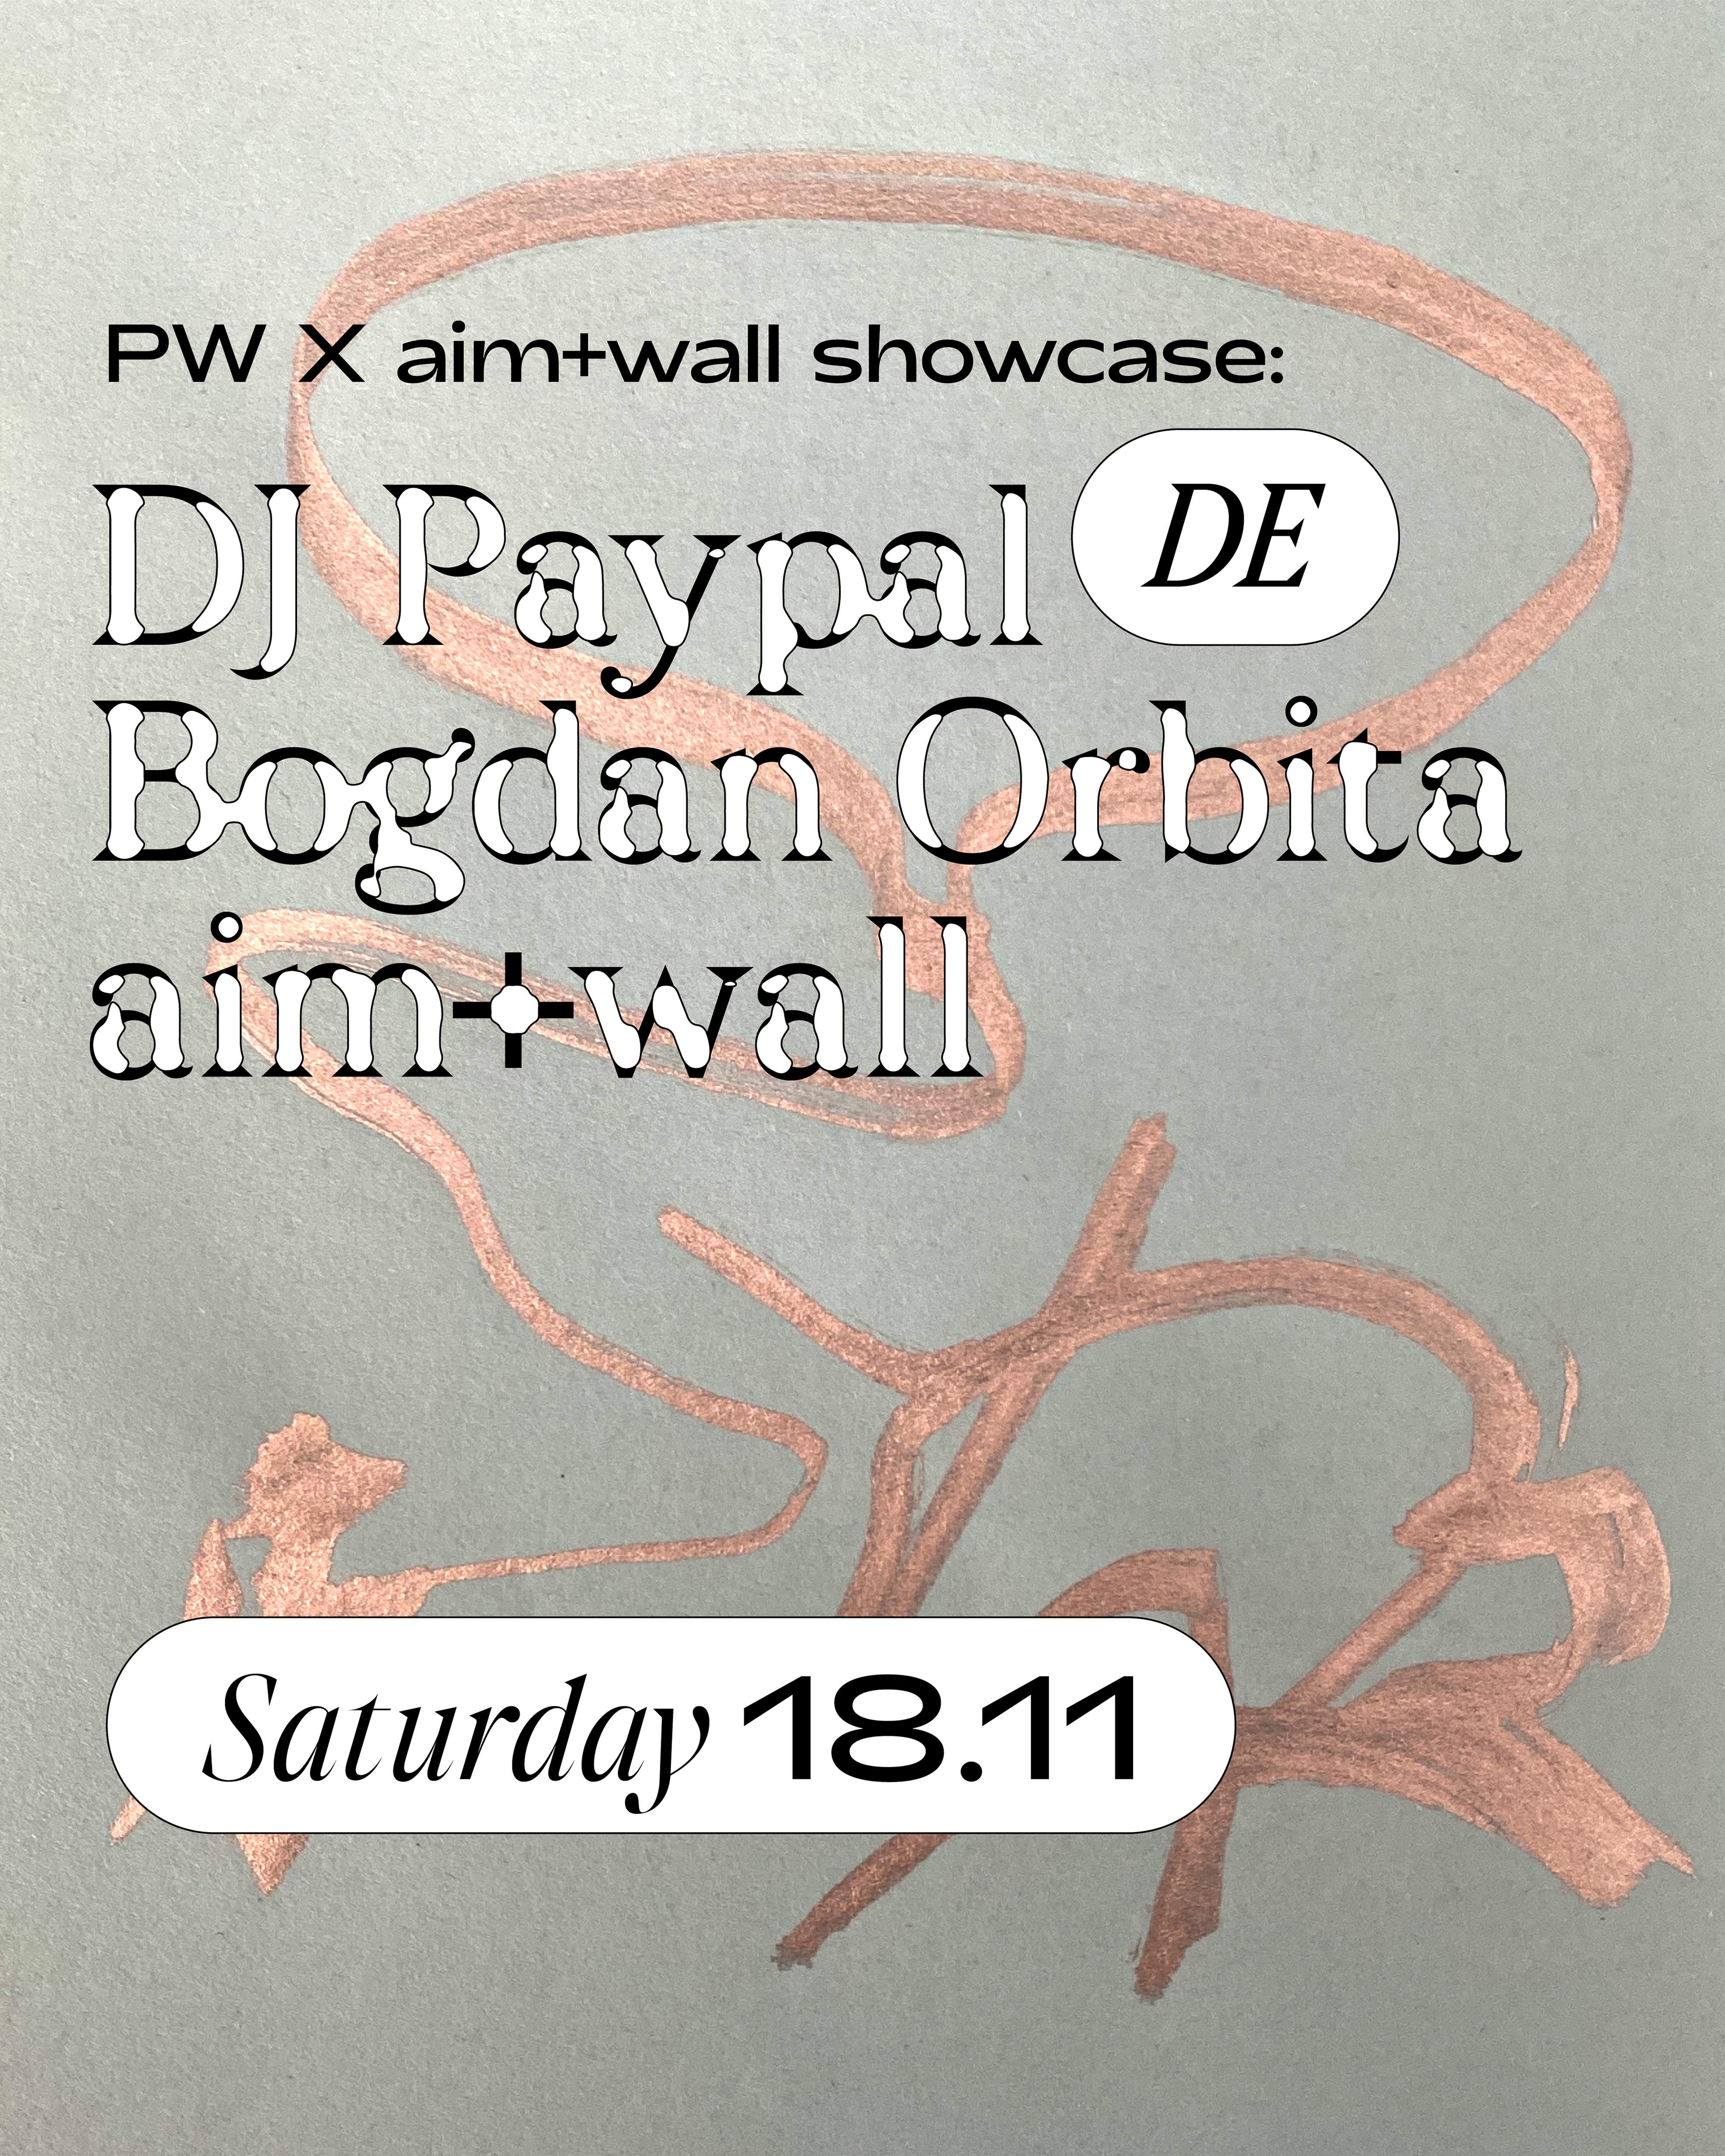 Platforma Wolff x aim+wall Showcase • DJ Paypal, Bogdan Orbita, aim+wall - フライヤー表